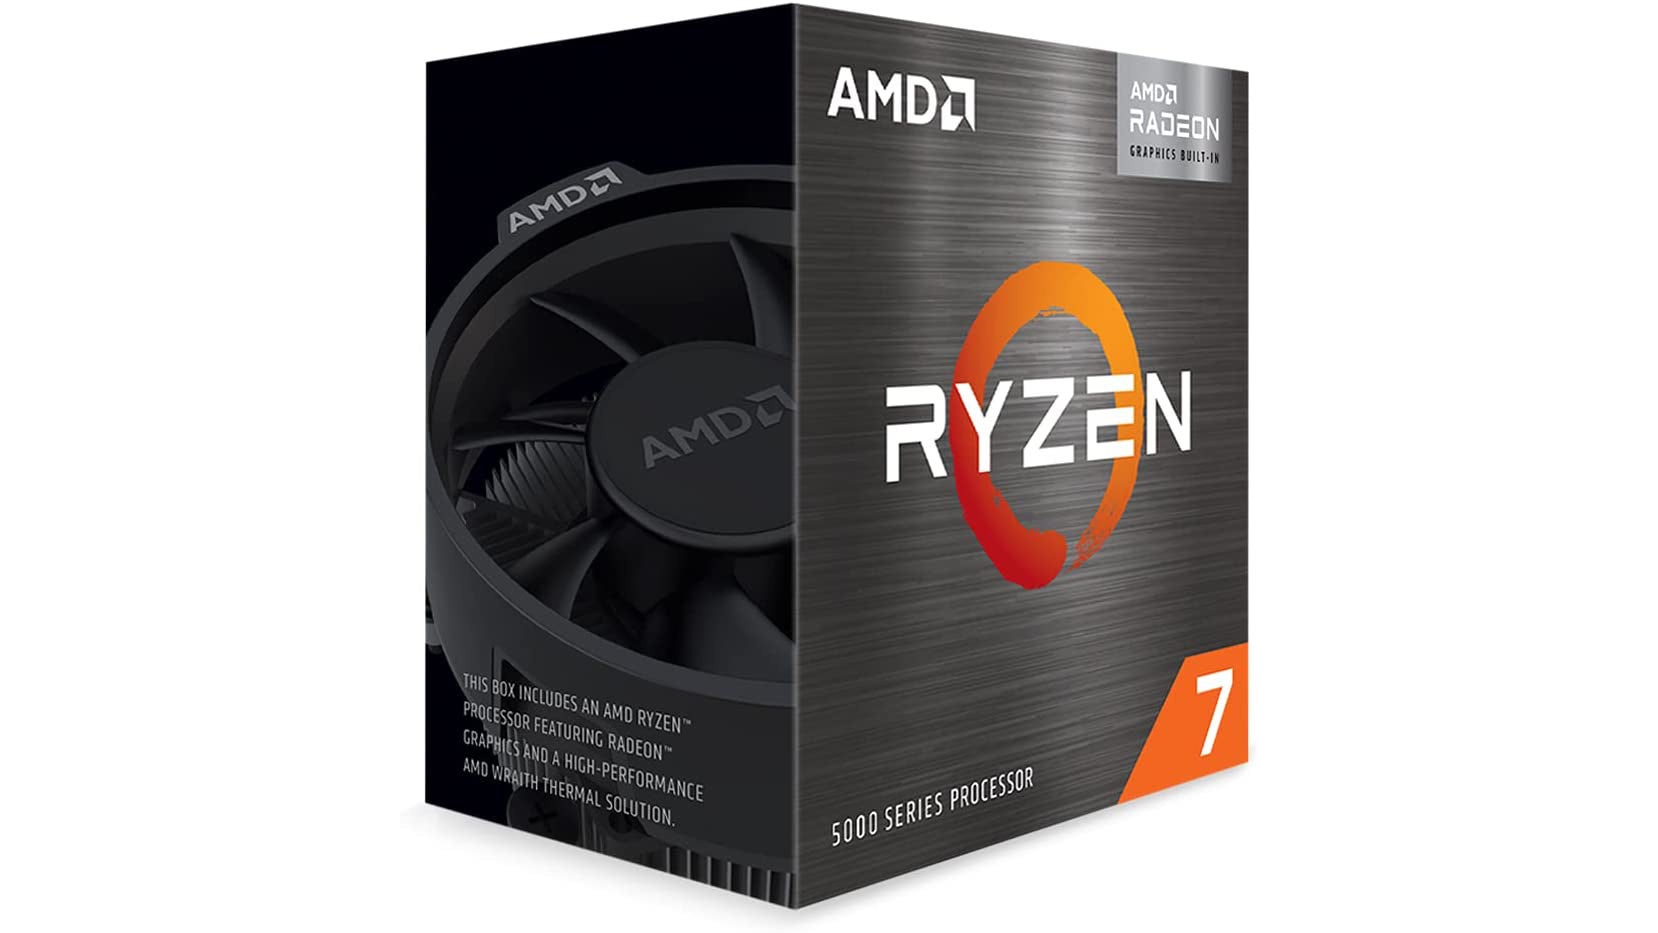 AMD's new Ryzen 5700G APU (that's CPU plus integrated graphics 